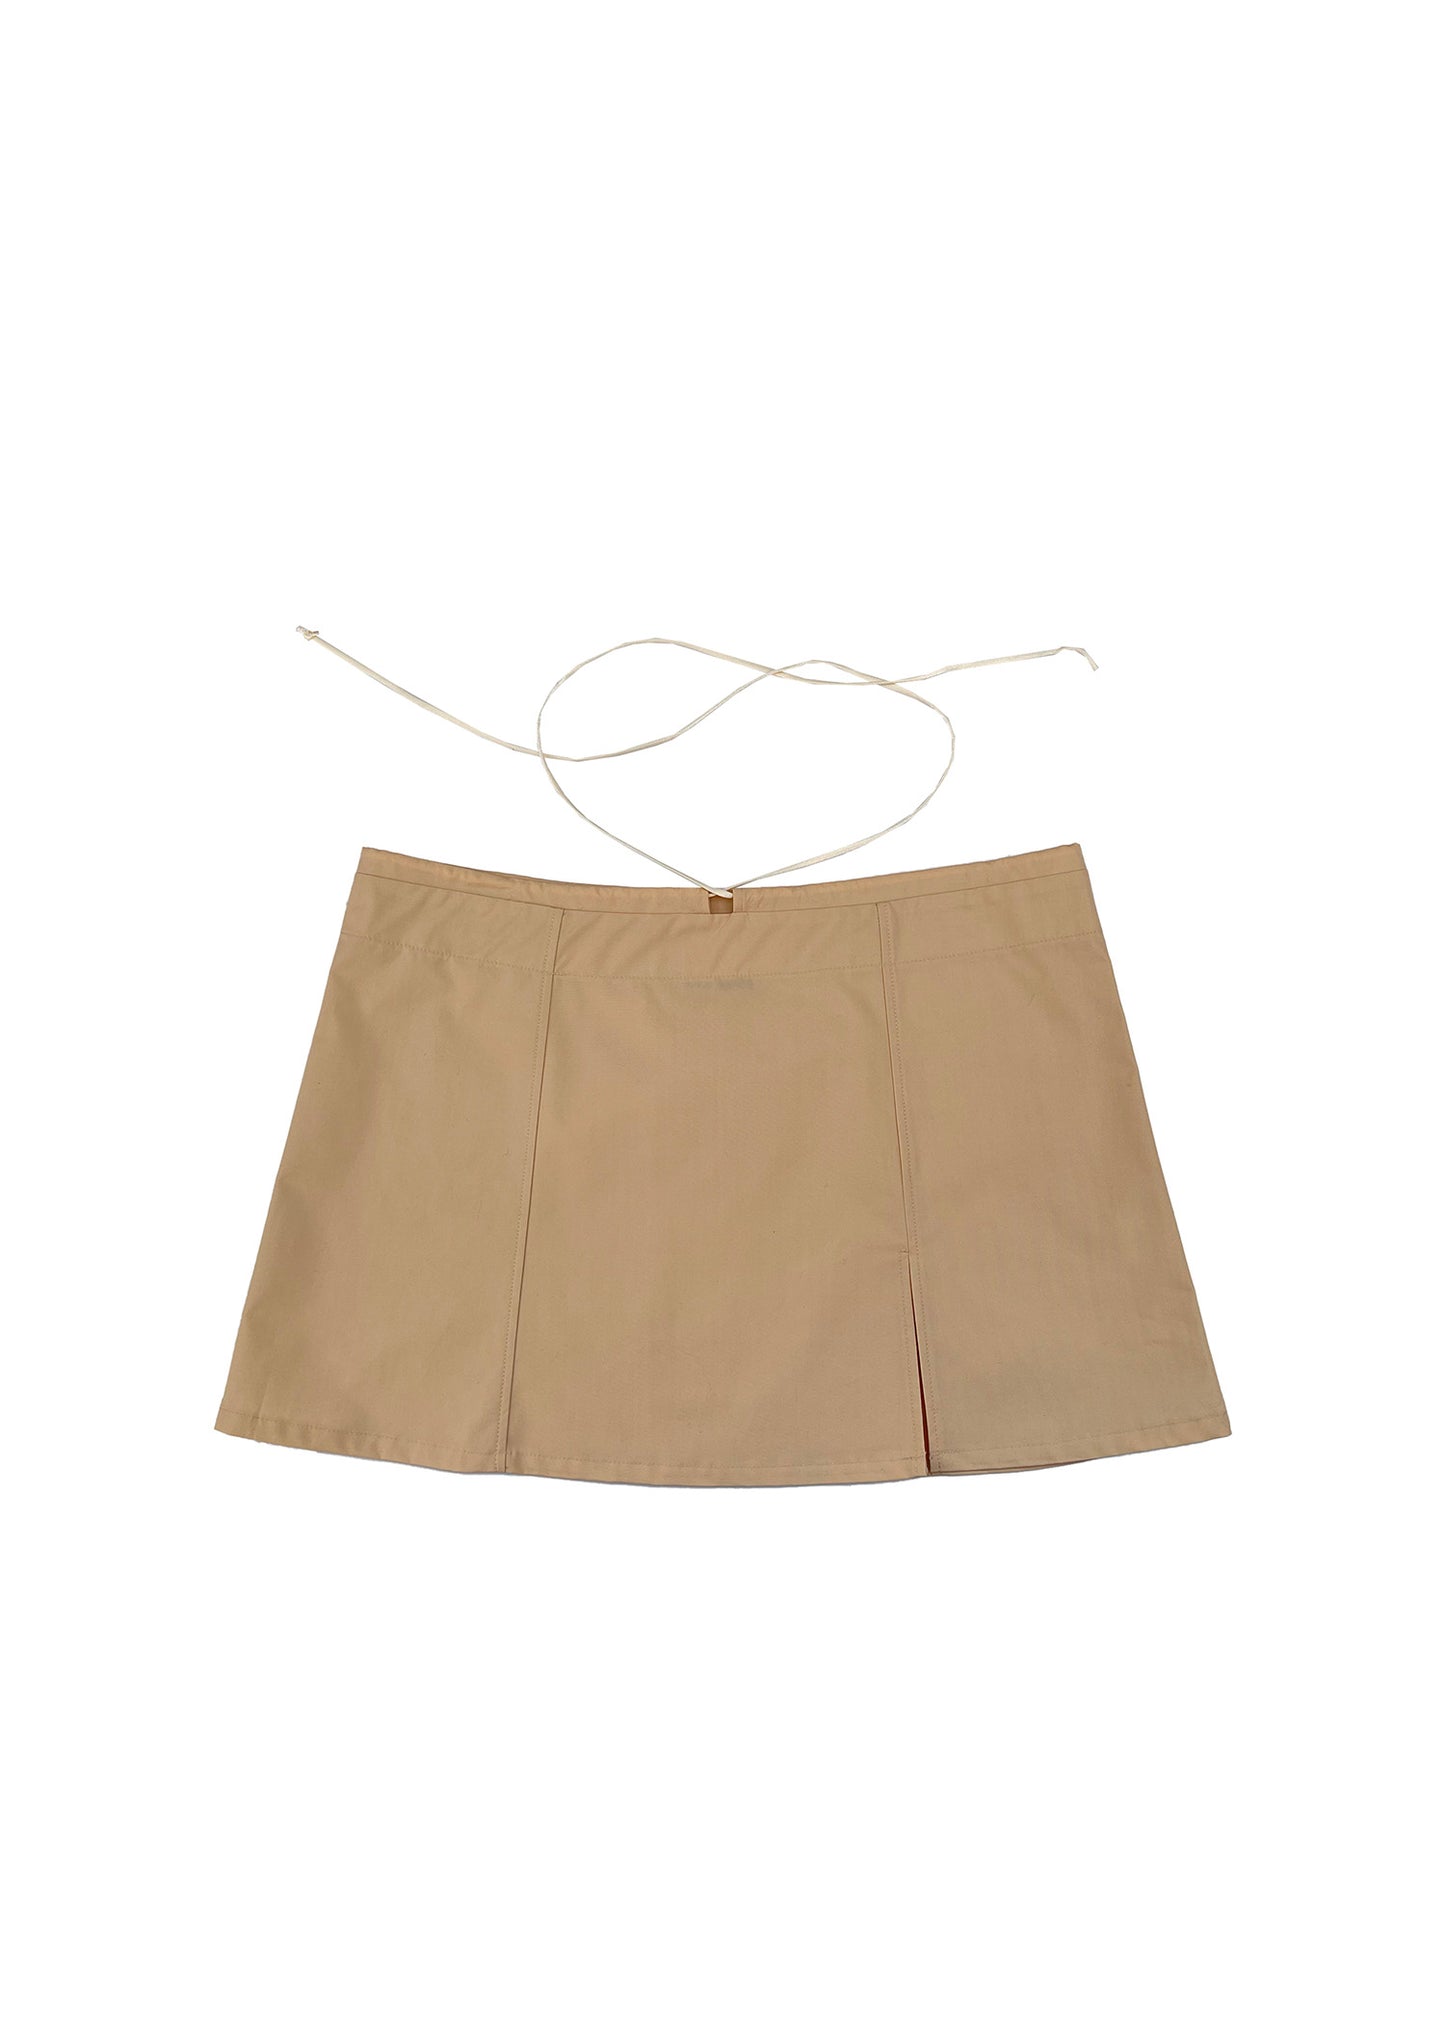 Urania Skirt in Nude Cotton